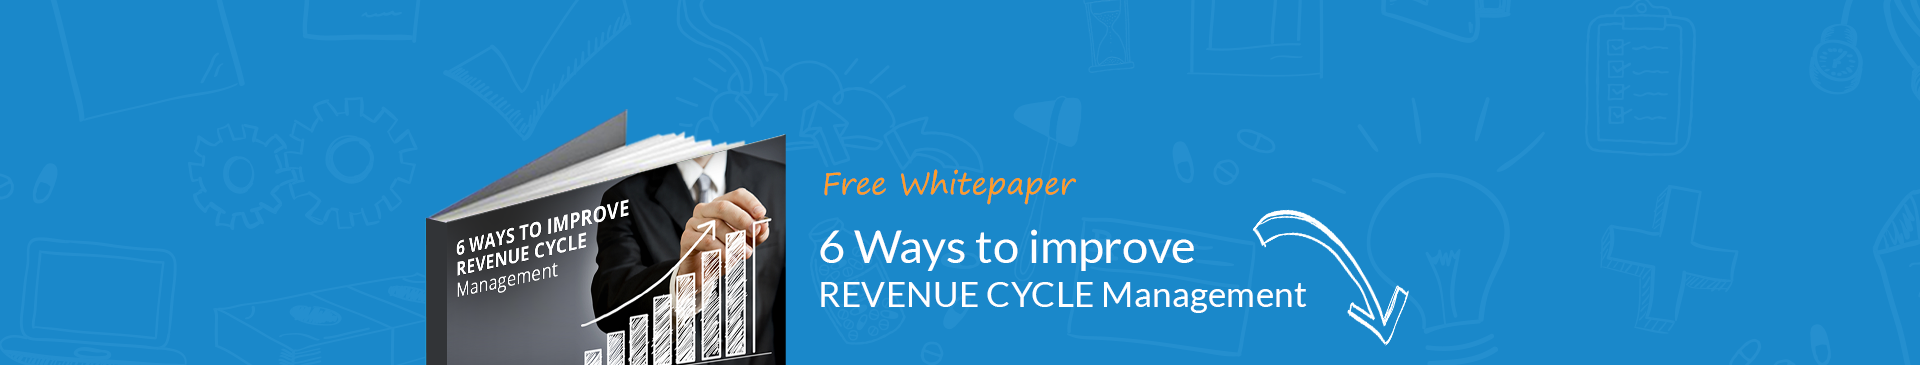 6 Ways to Improve Revenue Cycle Management